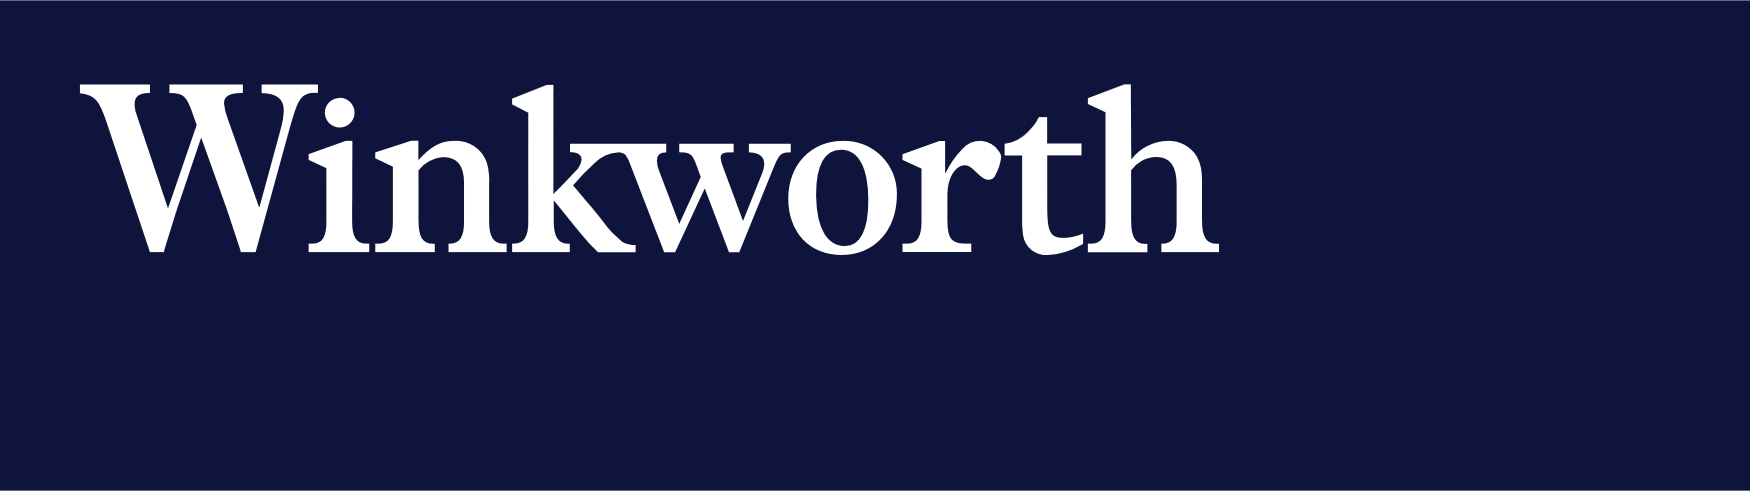 winkworth logo